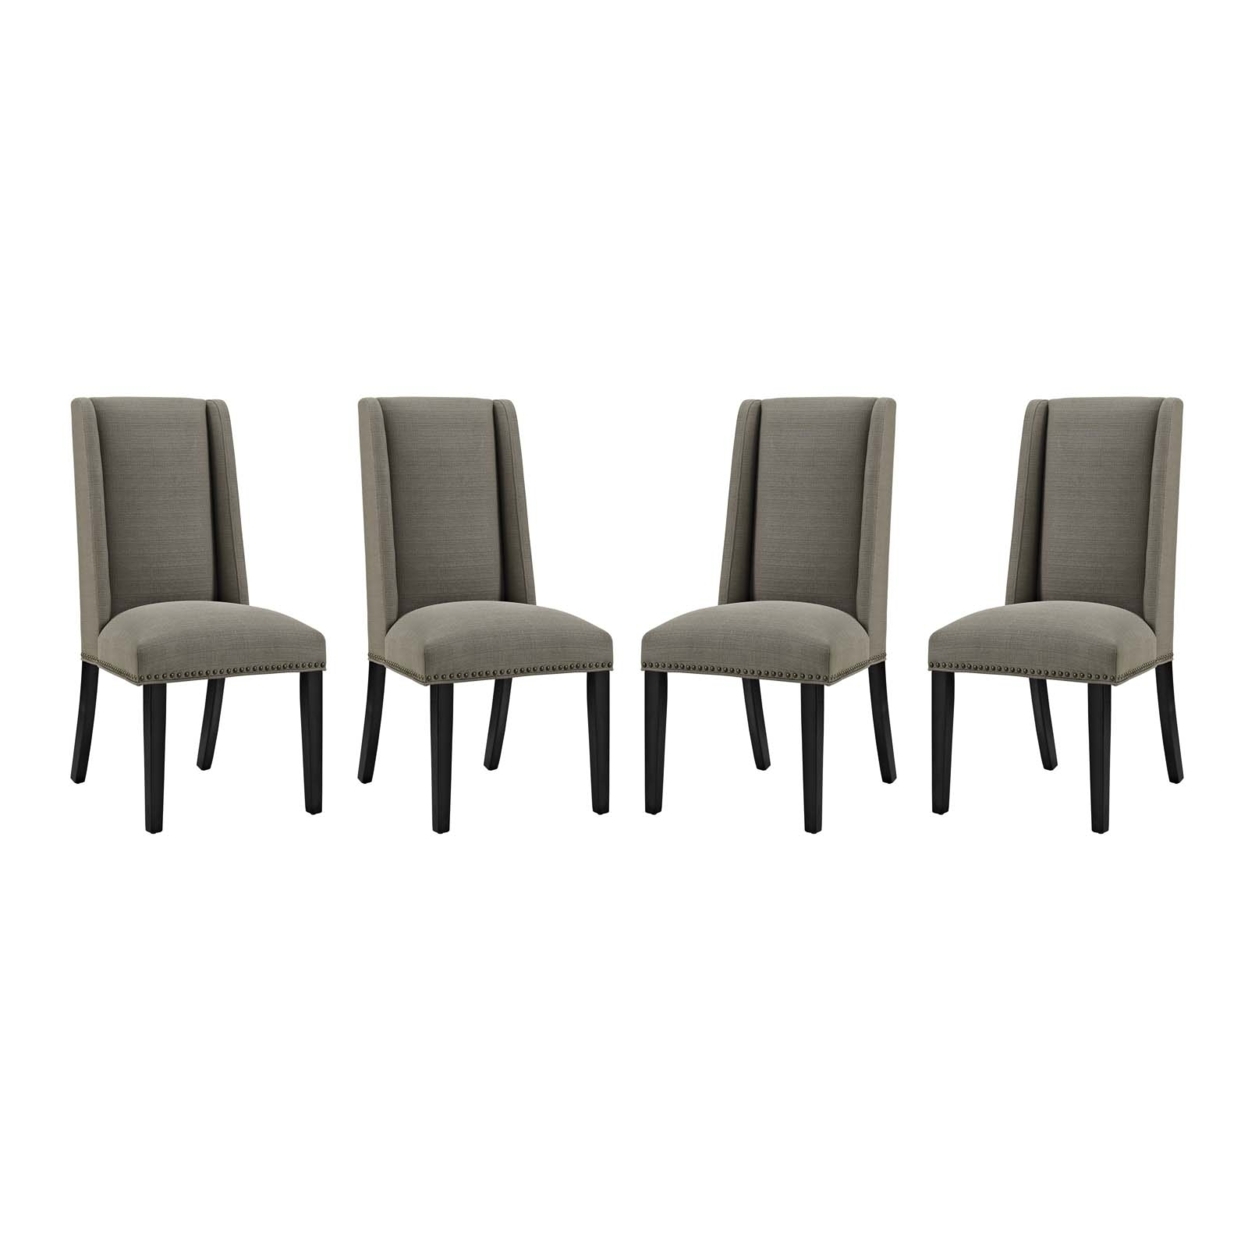 Baron Dining Chair Fabric Set Of 4, Granite